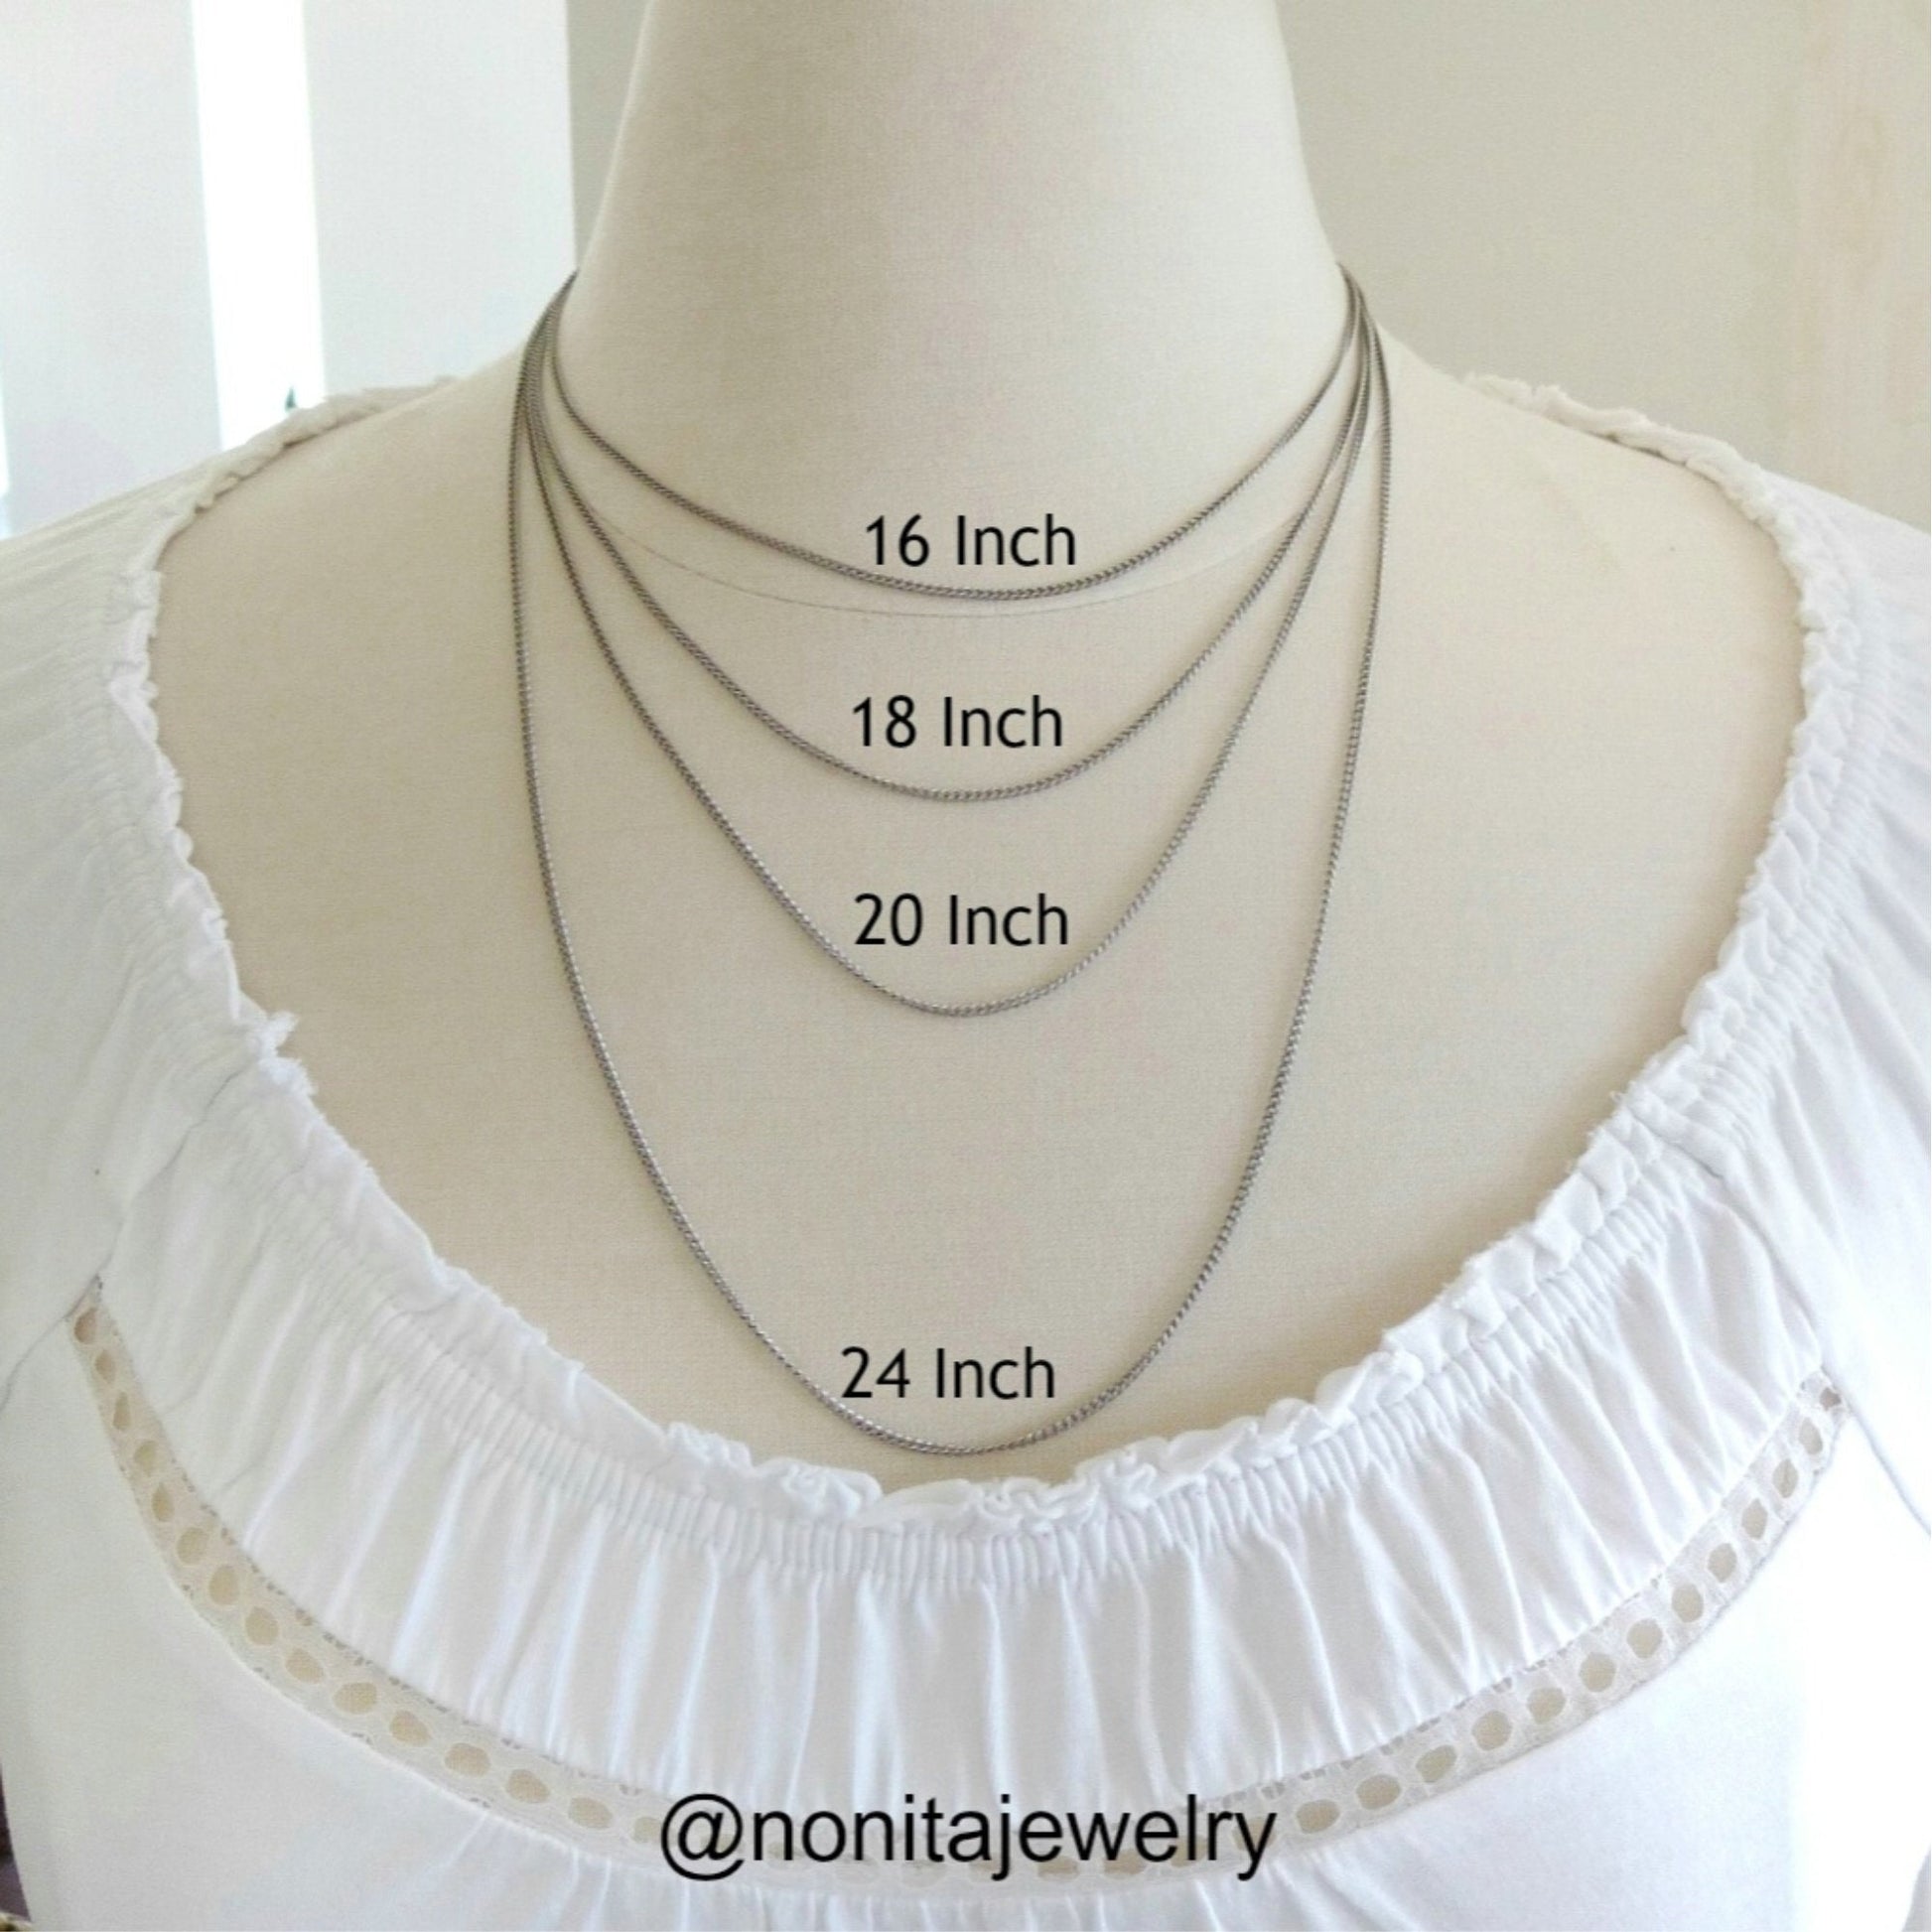 Triangle Titanium Necklace, Everyday Modern Geometric Shaped Necklace, Hypoallergenic Niobium and Titanium No Nickel Triangle Necklace